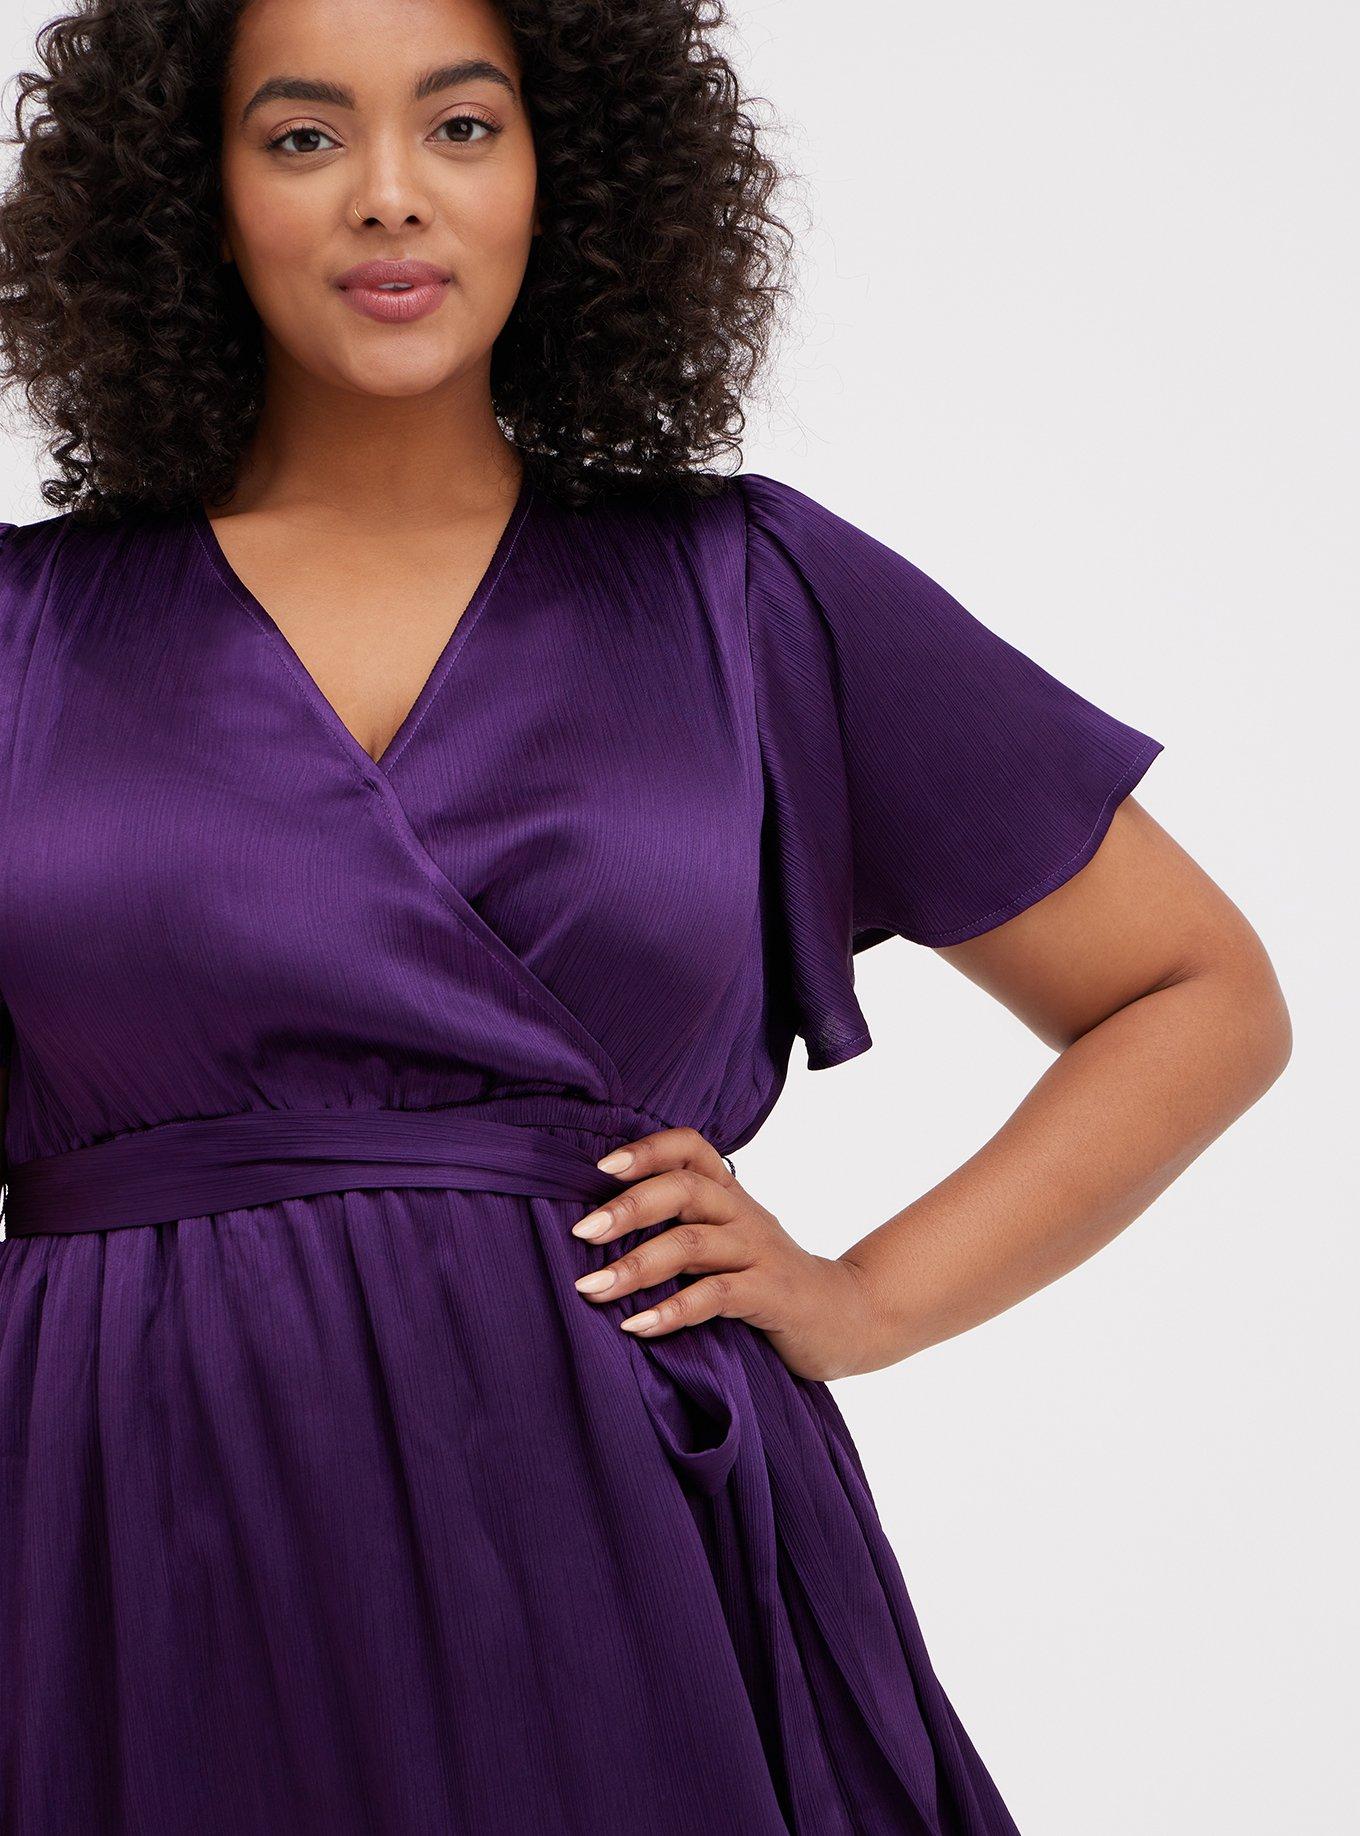 Torrid Solid Purple Casual Dress Size 2X Plus (2) (Plus) - 63% off